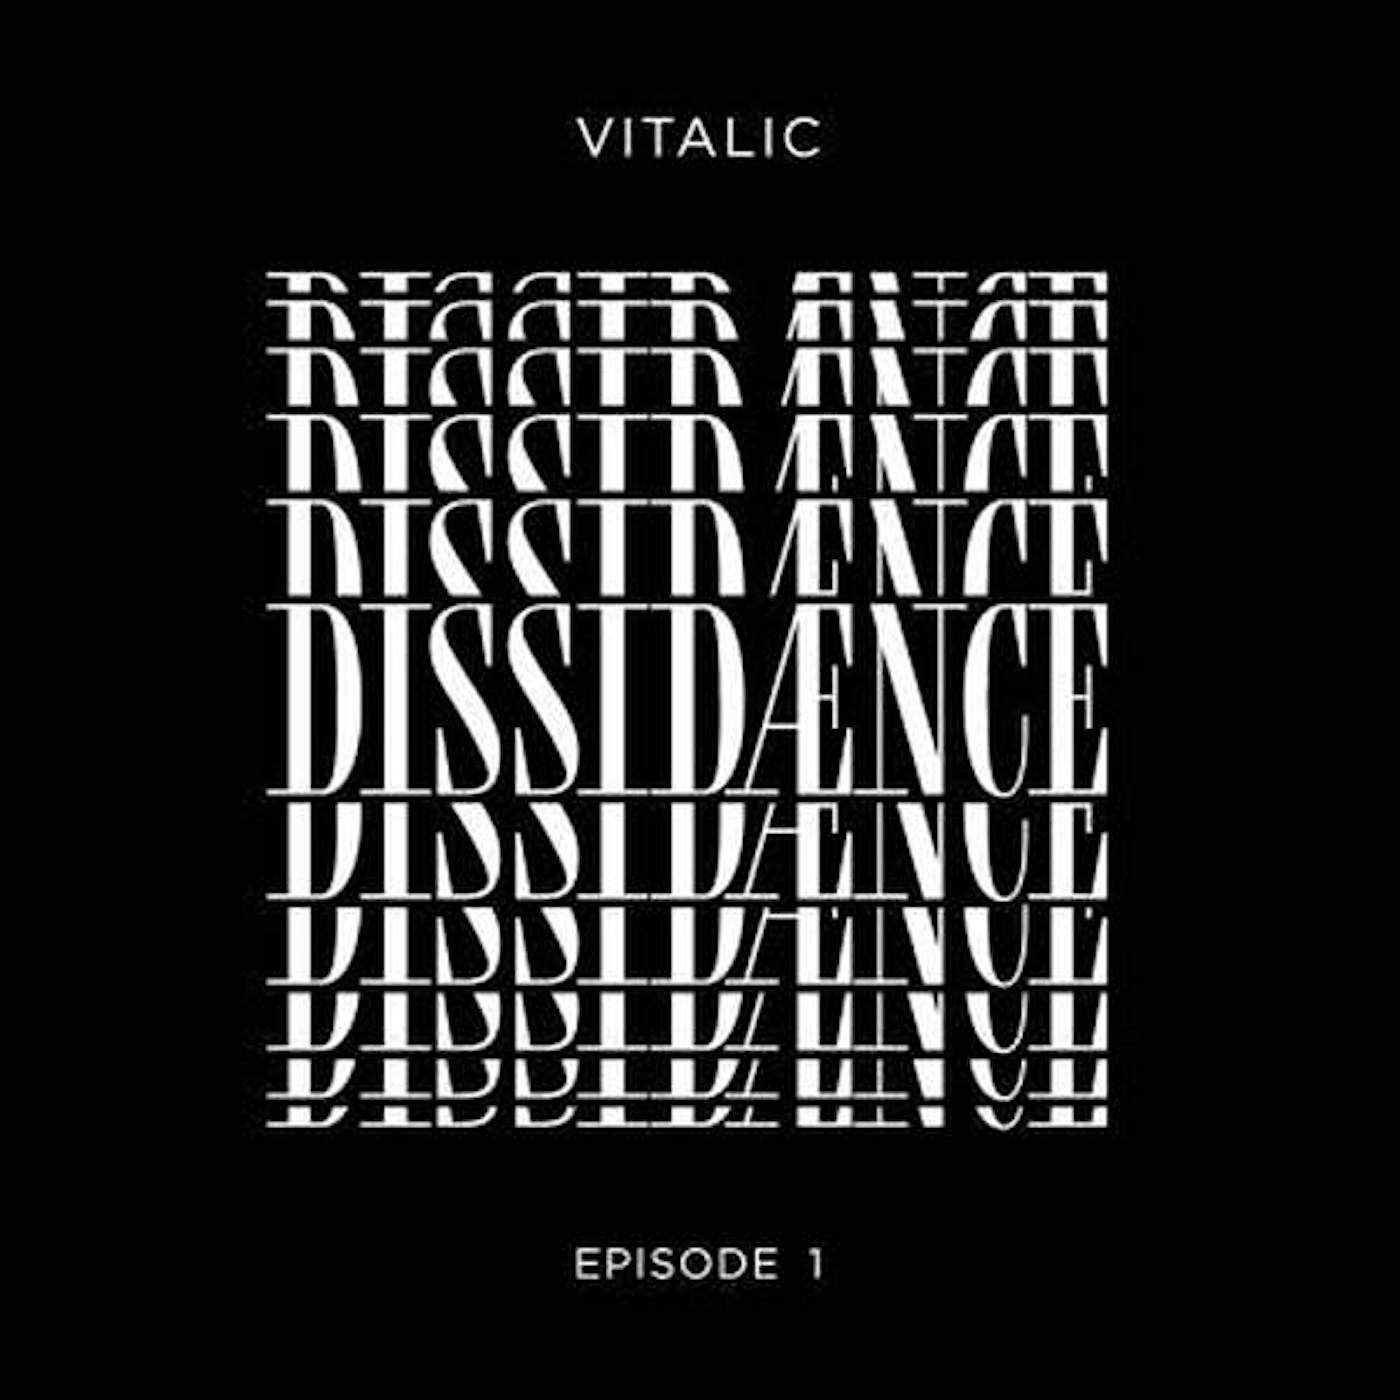 Vitalic Dissedaence Vol 1.2 vinyl record